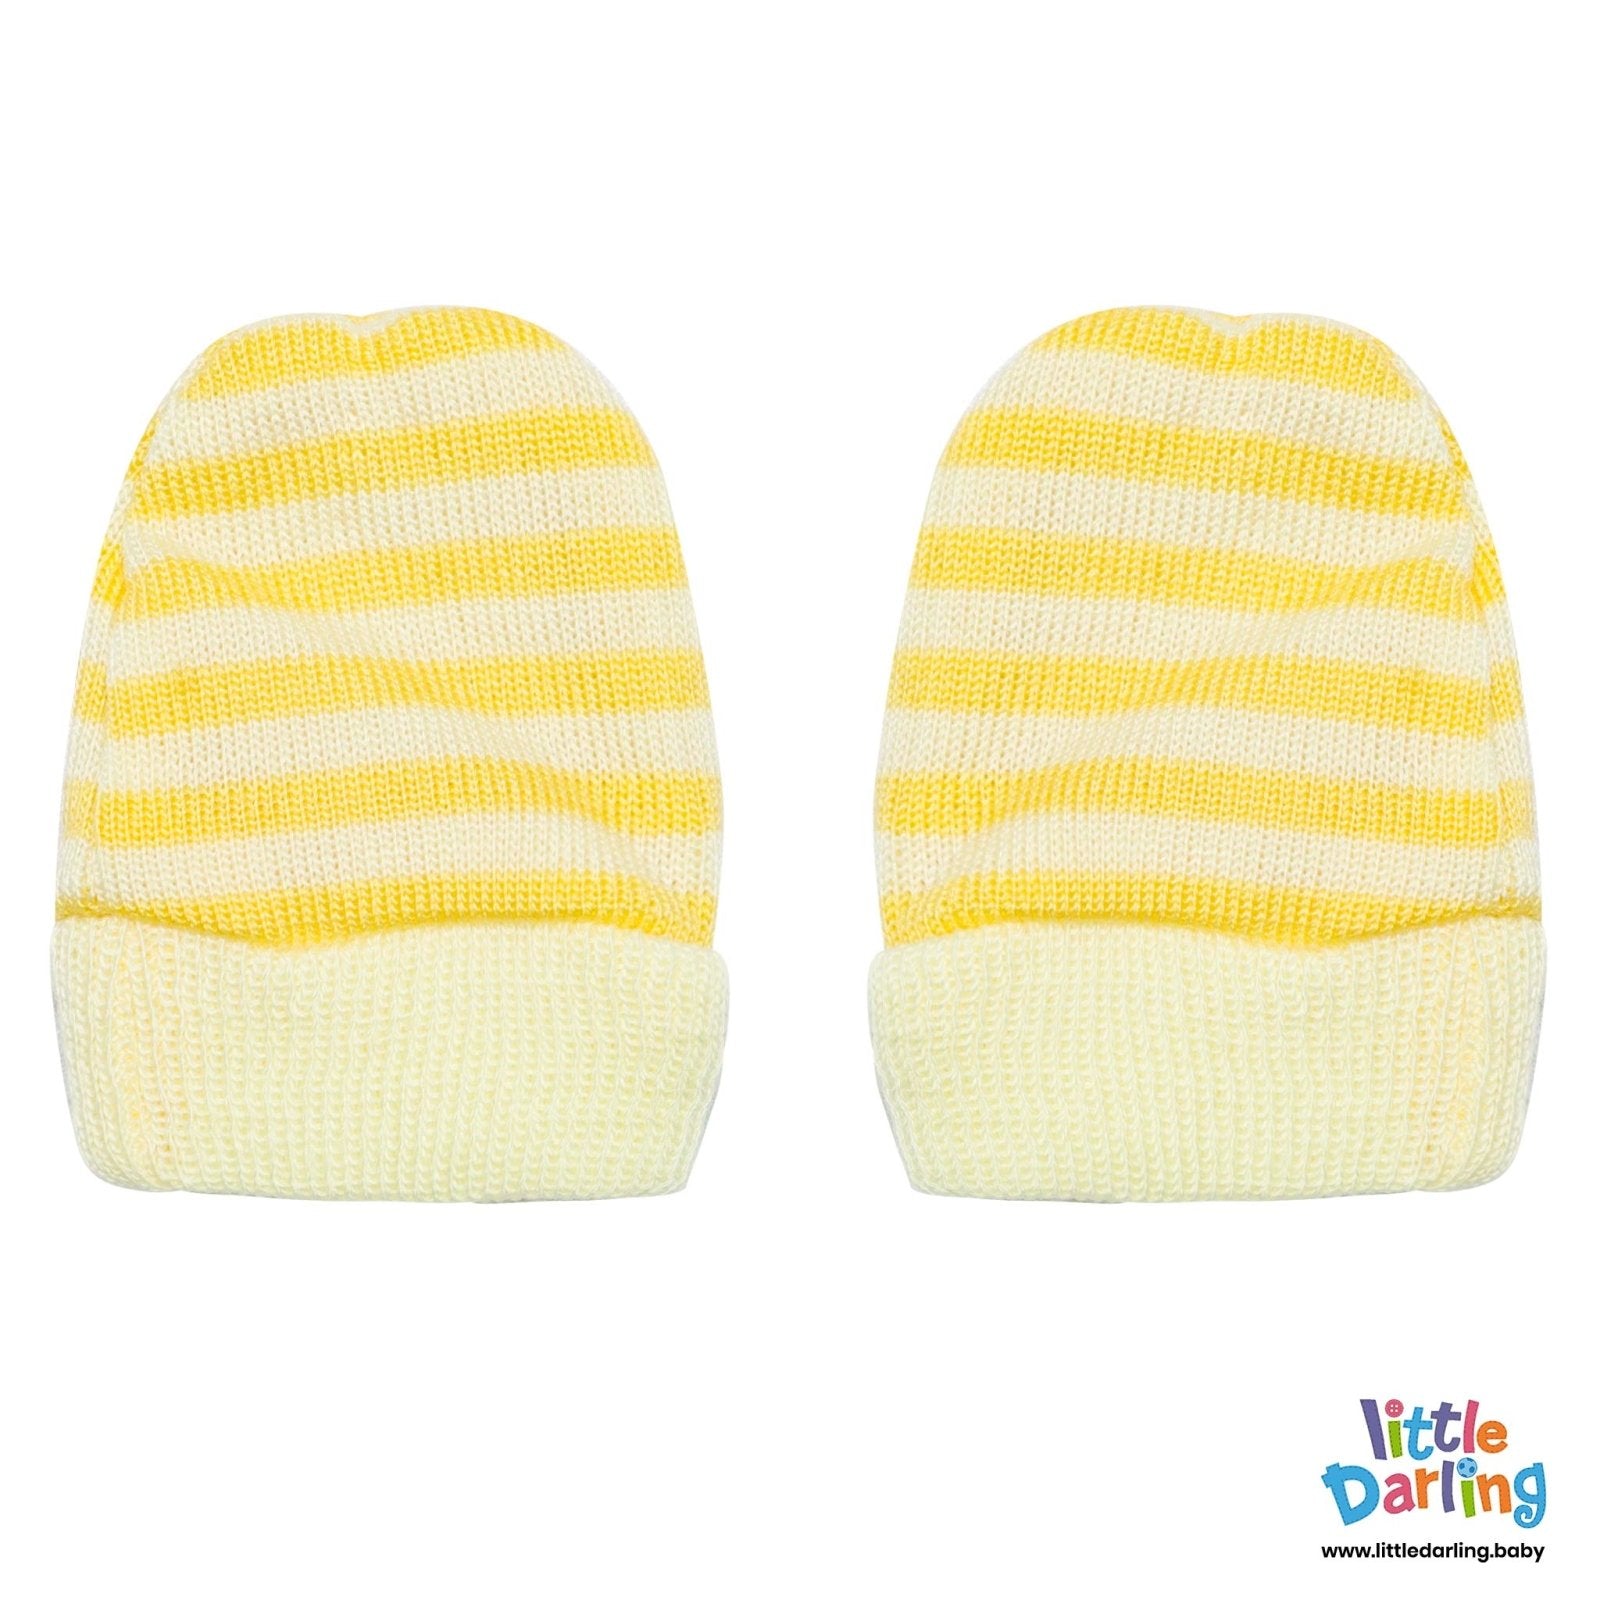 4 Pcs Woolen Gift Set White & Yellow Stripes by Little Darling